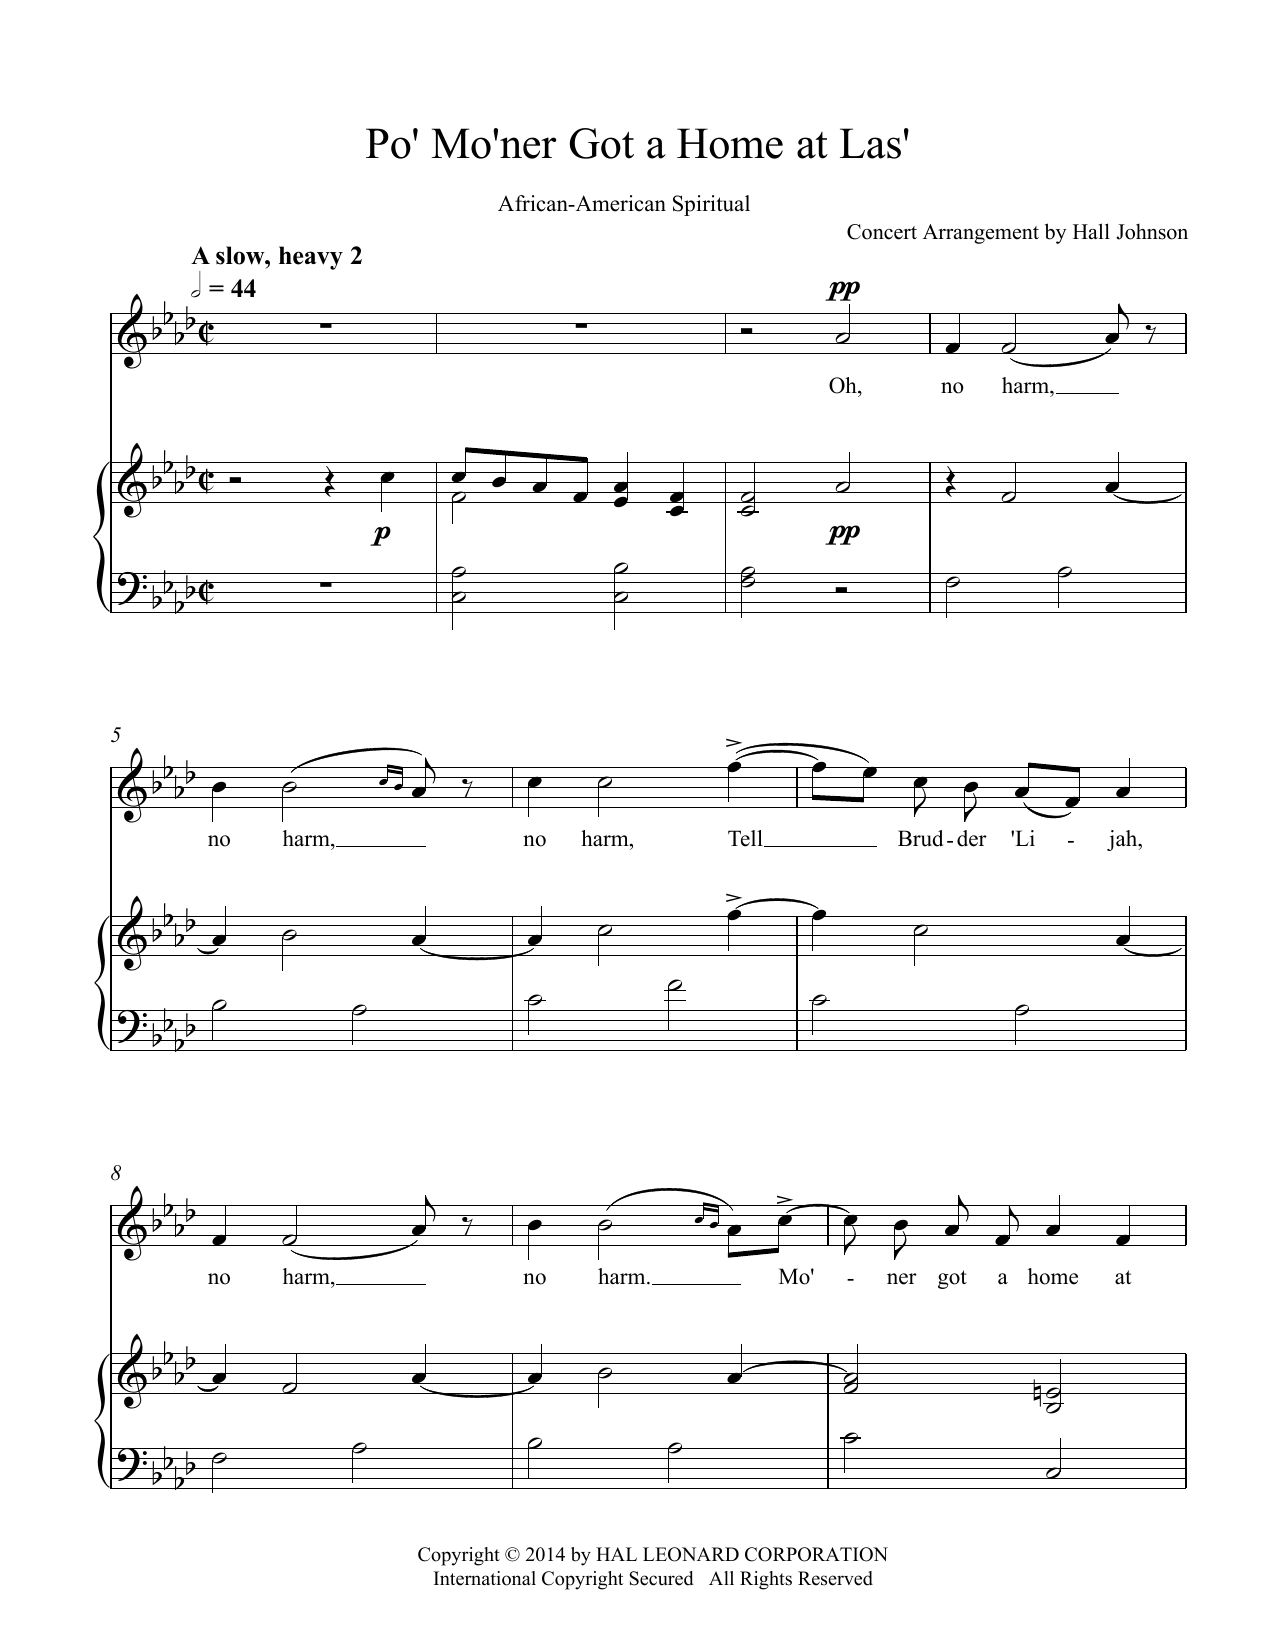 Hall Johnson Po' Mo'ner Got a Home at Las' (F minor) sheet music notes and chords. Download Printable PDF.